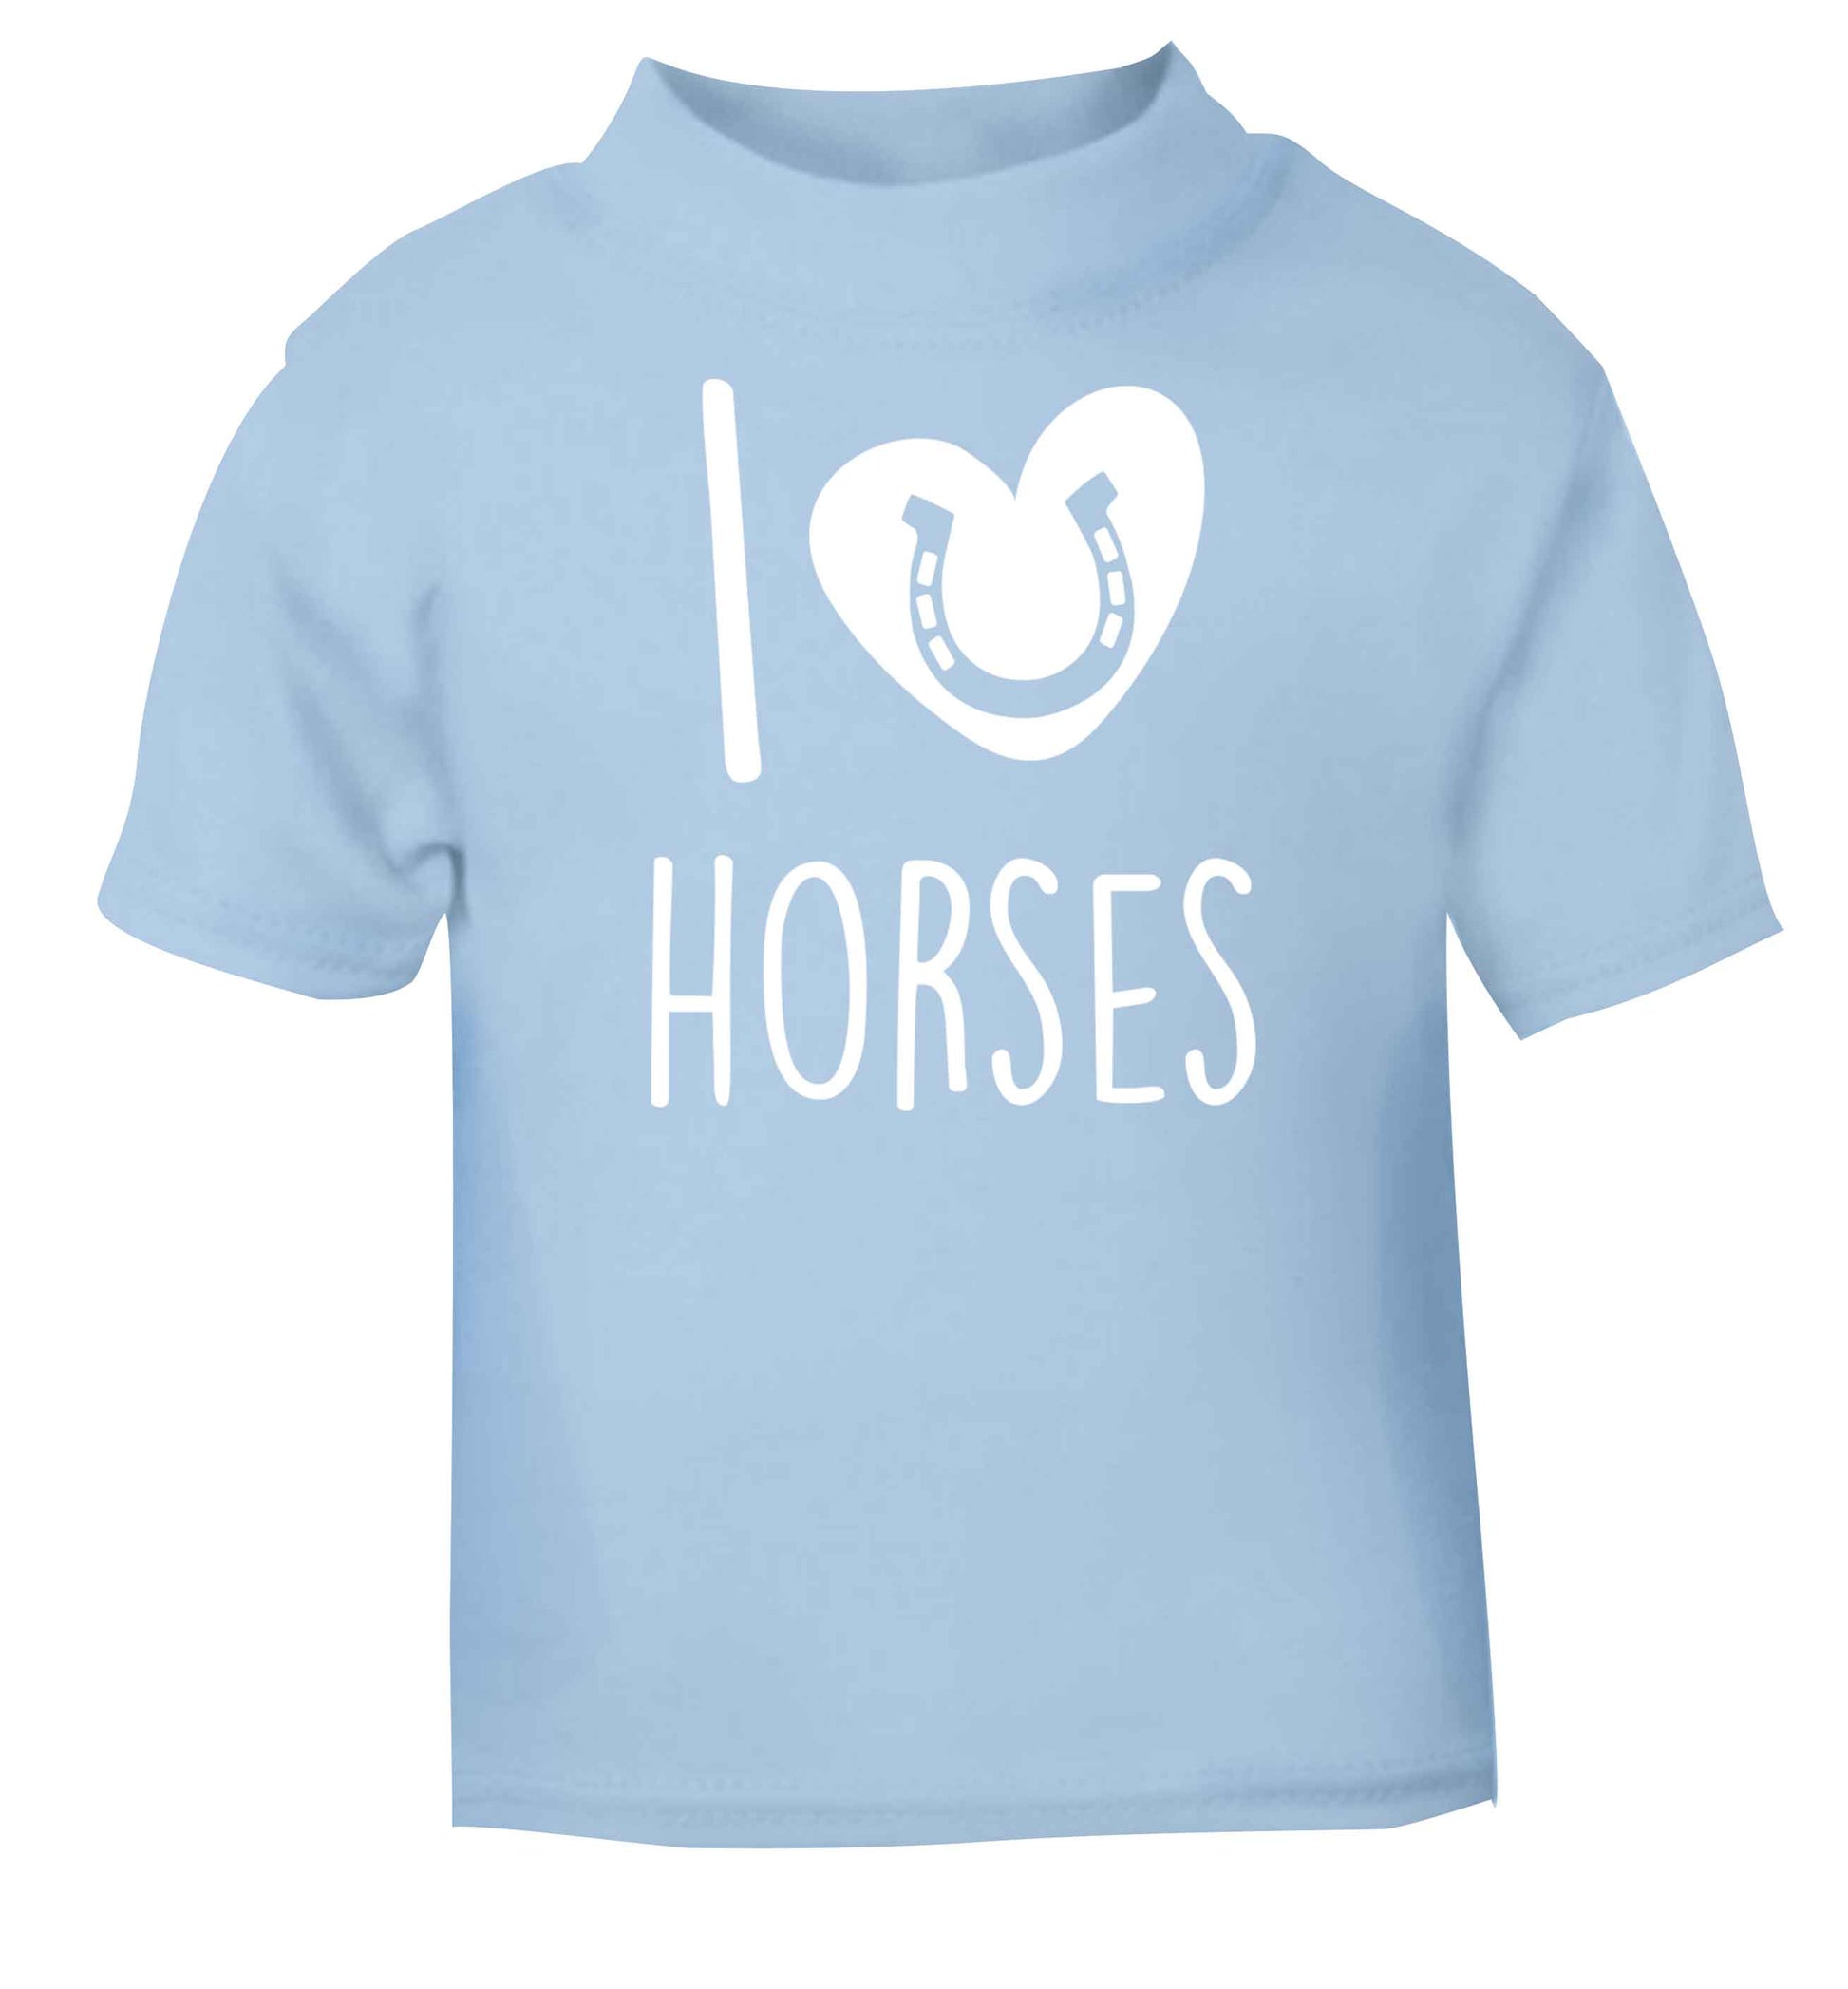 I love horses light blue baby toddler Tshirt 2 Years